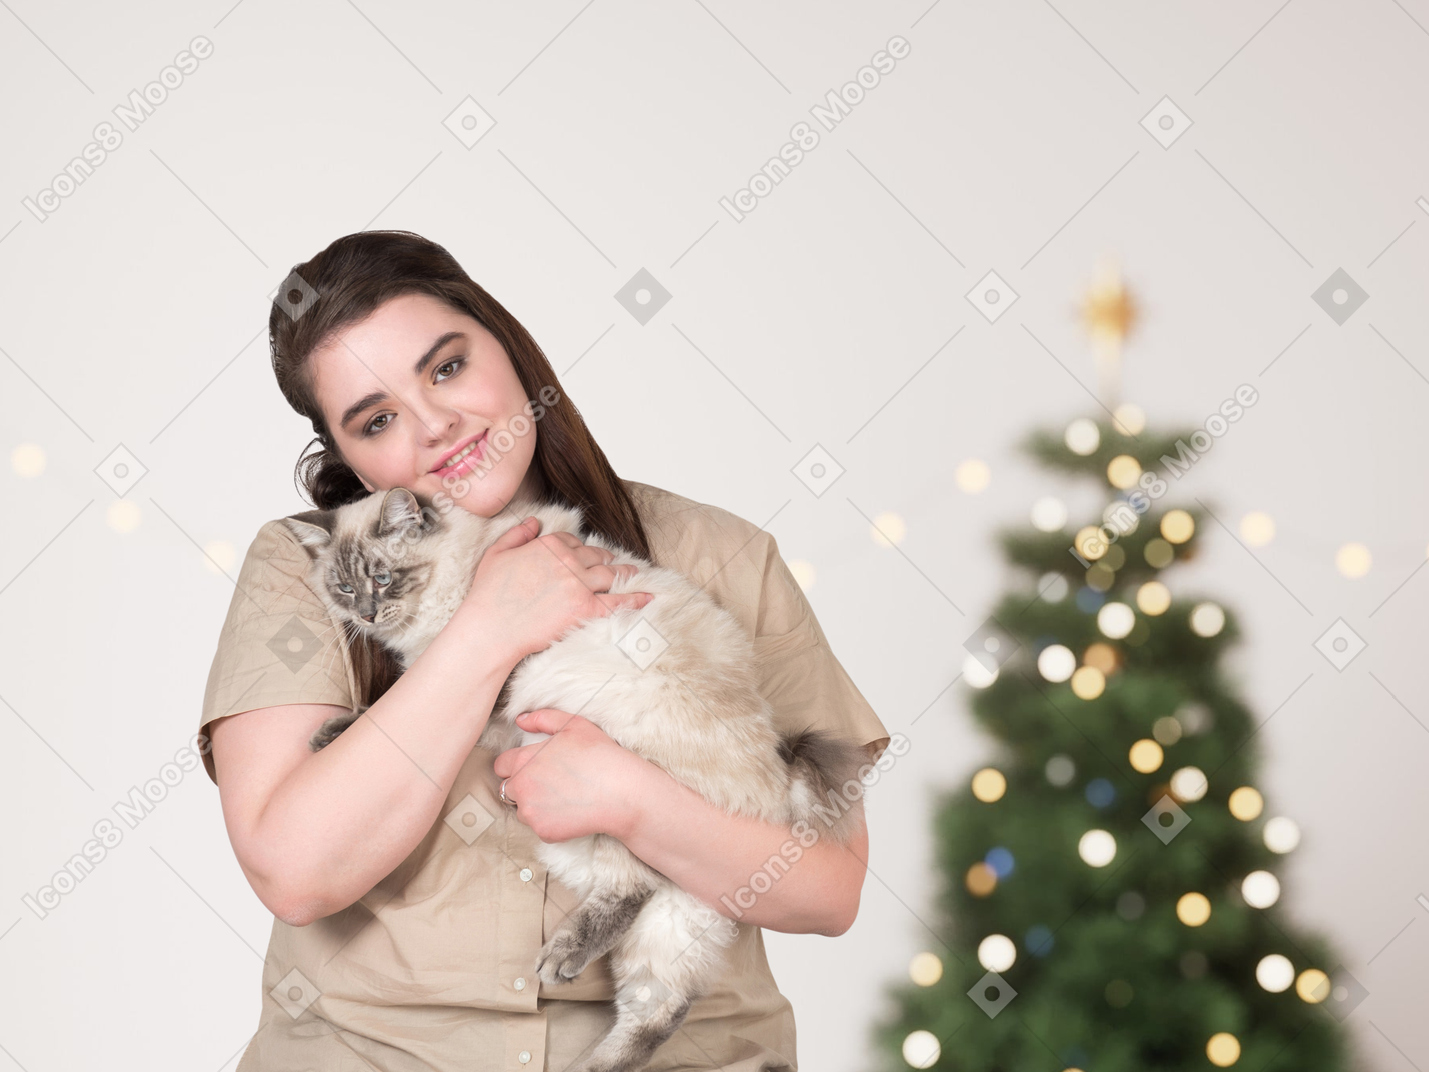 Mujer regordeta celebrando la navidad con su gato